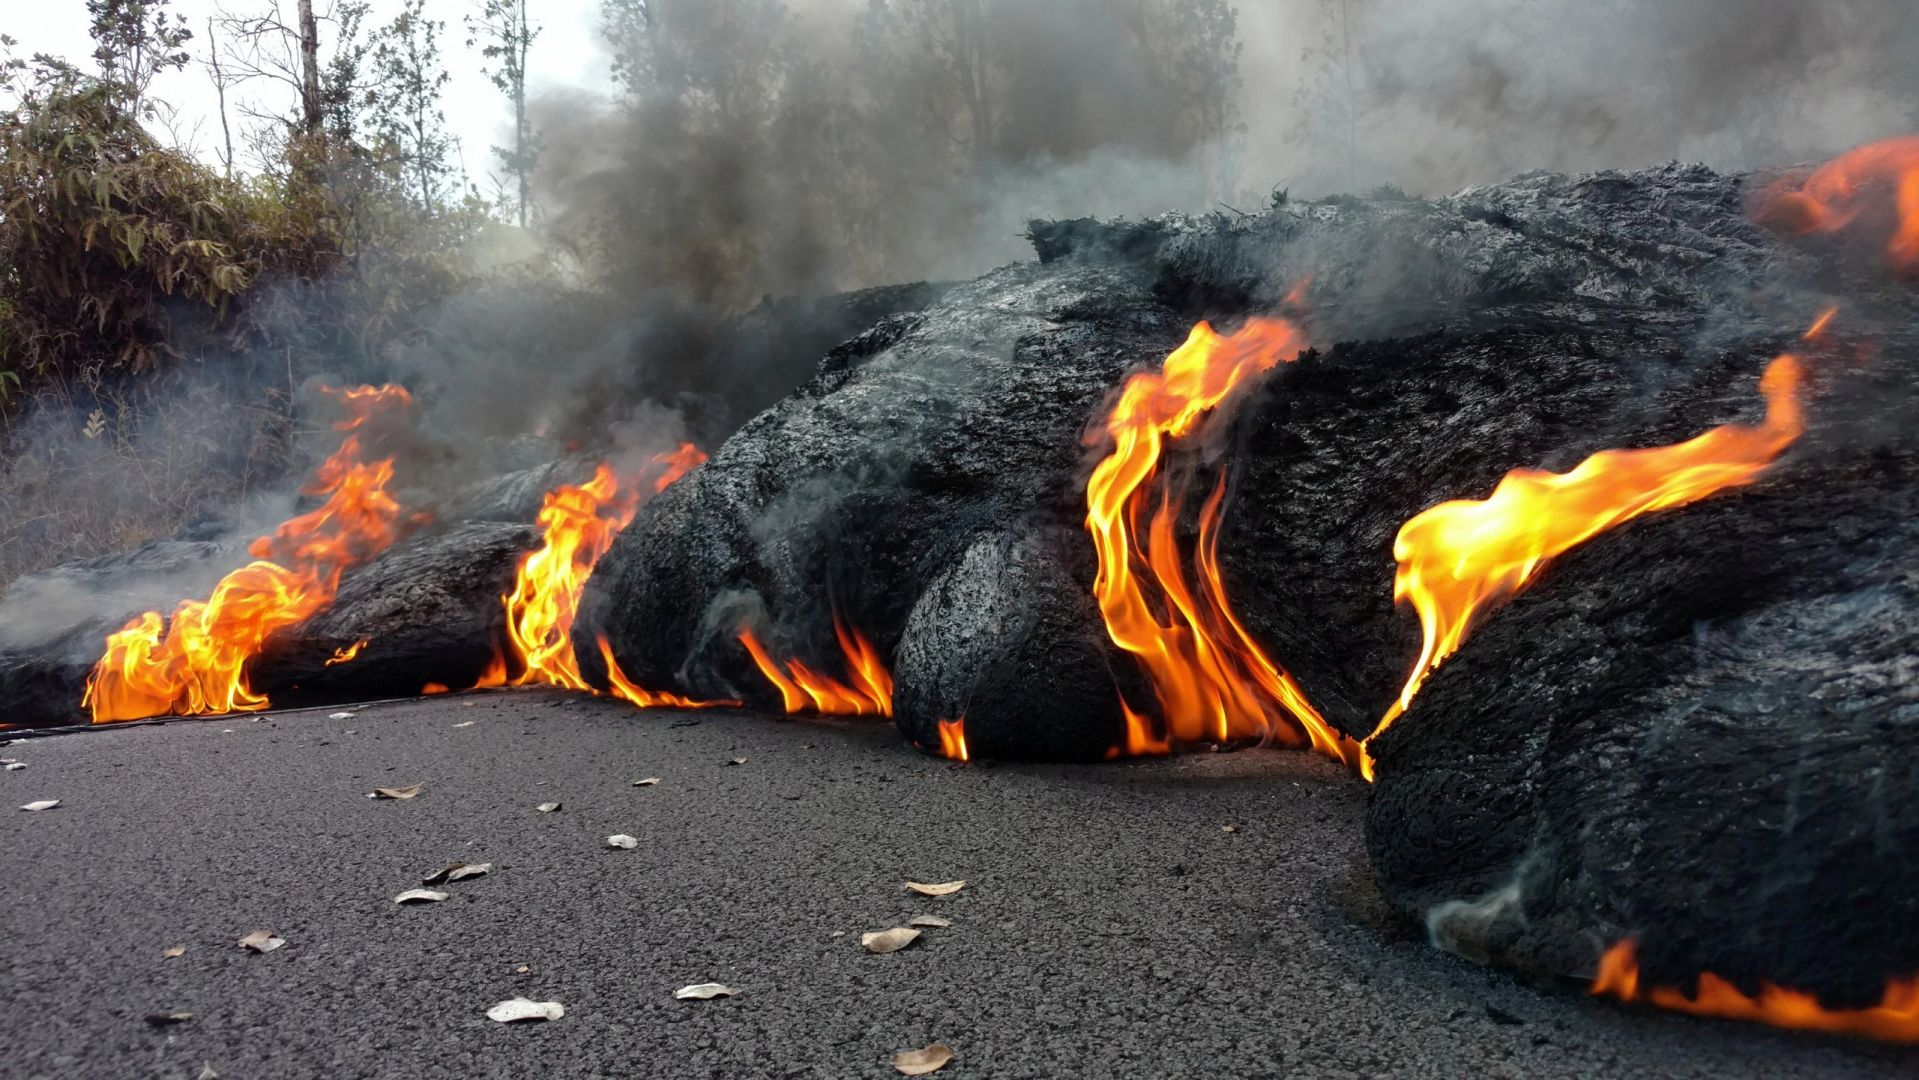 General 1919x1080 nature volcano Hawaii Kilauea lava eruption road fire smoke plants leaves asphalt